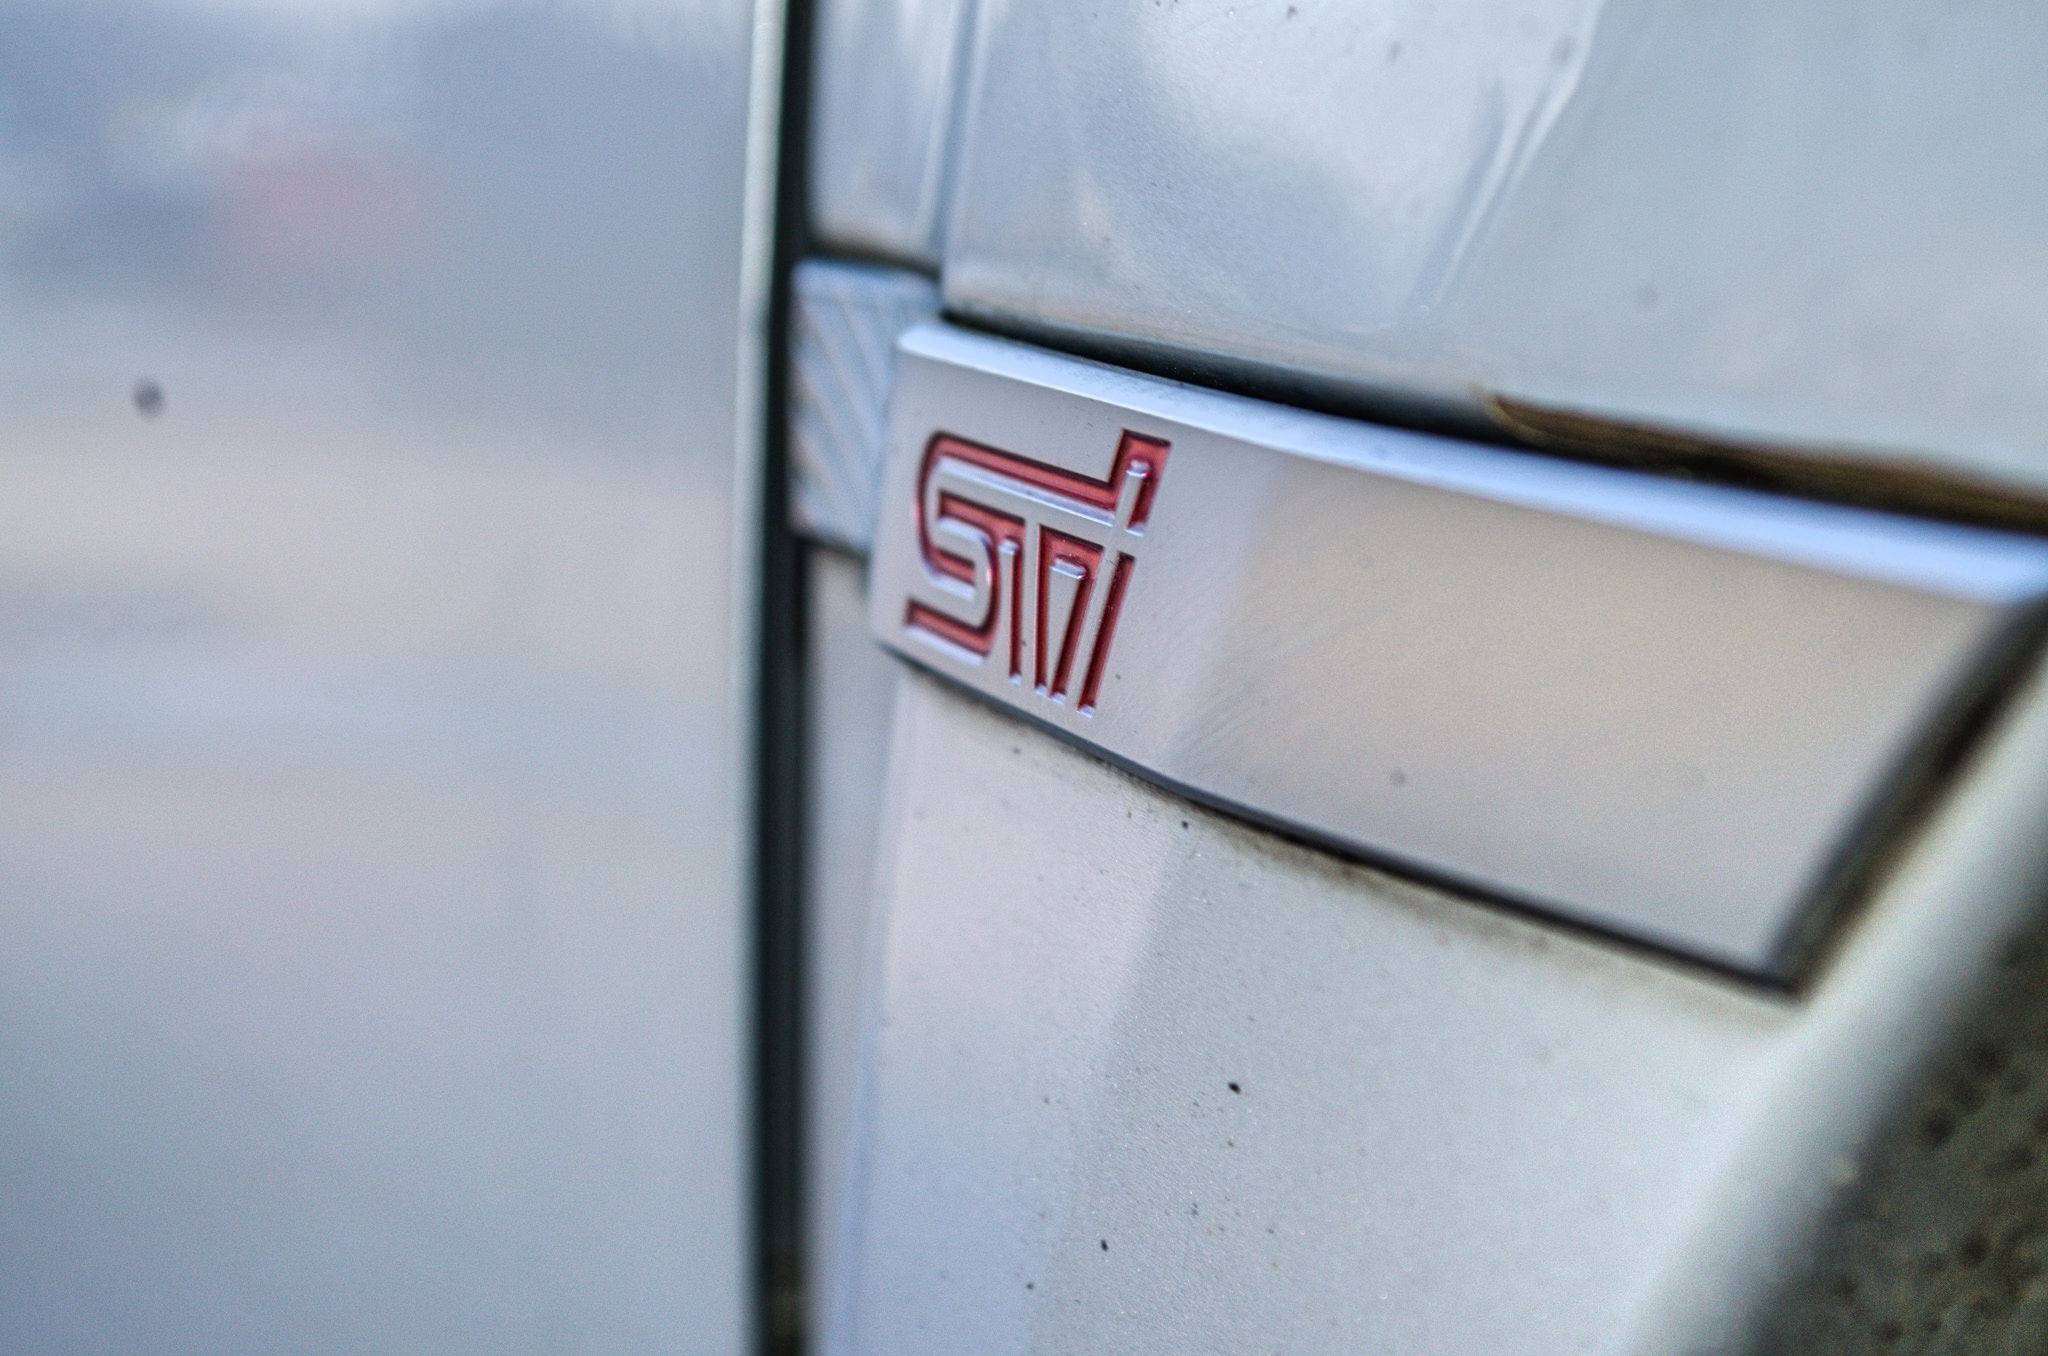 2011 Subaru Impreza WRX STI-TP UK AWD 2.5 litre turbo 4 door saloon car - Image 29 of 57